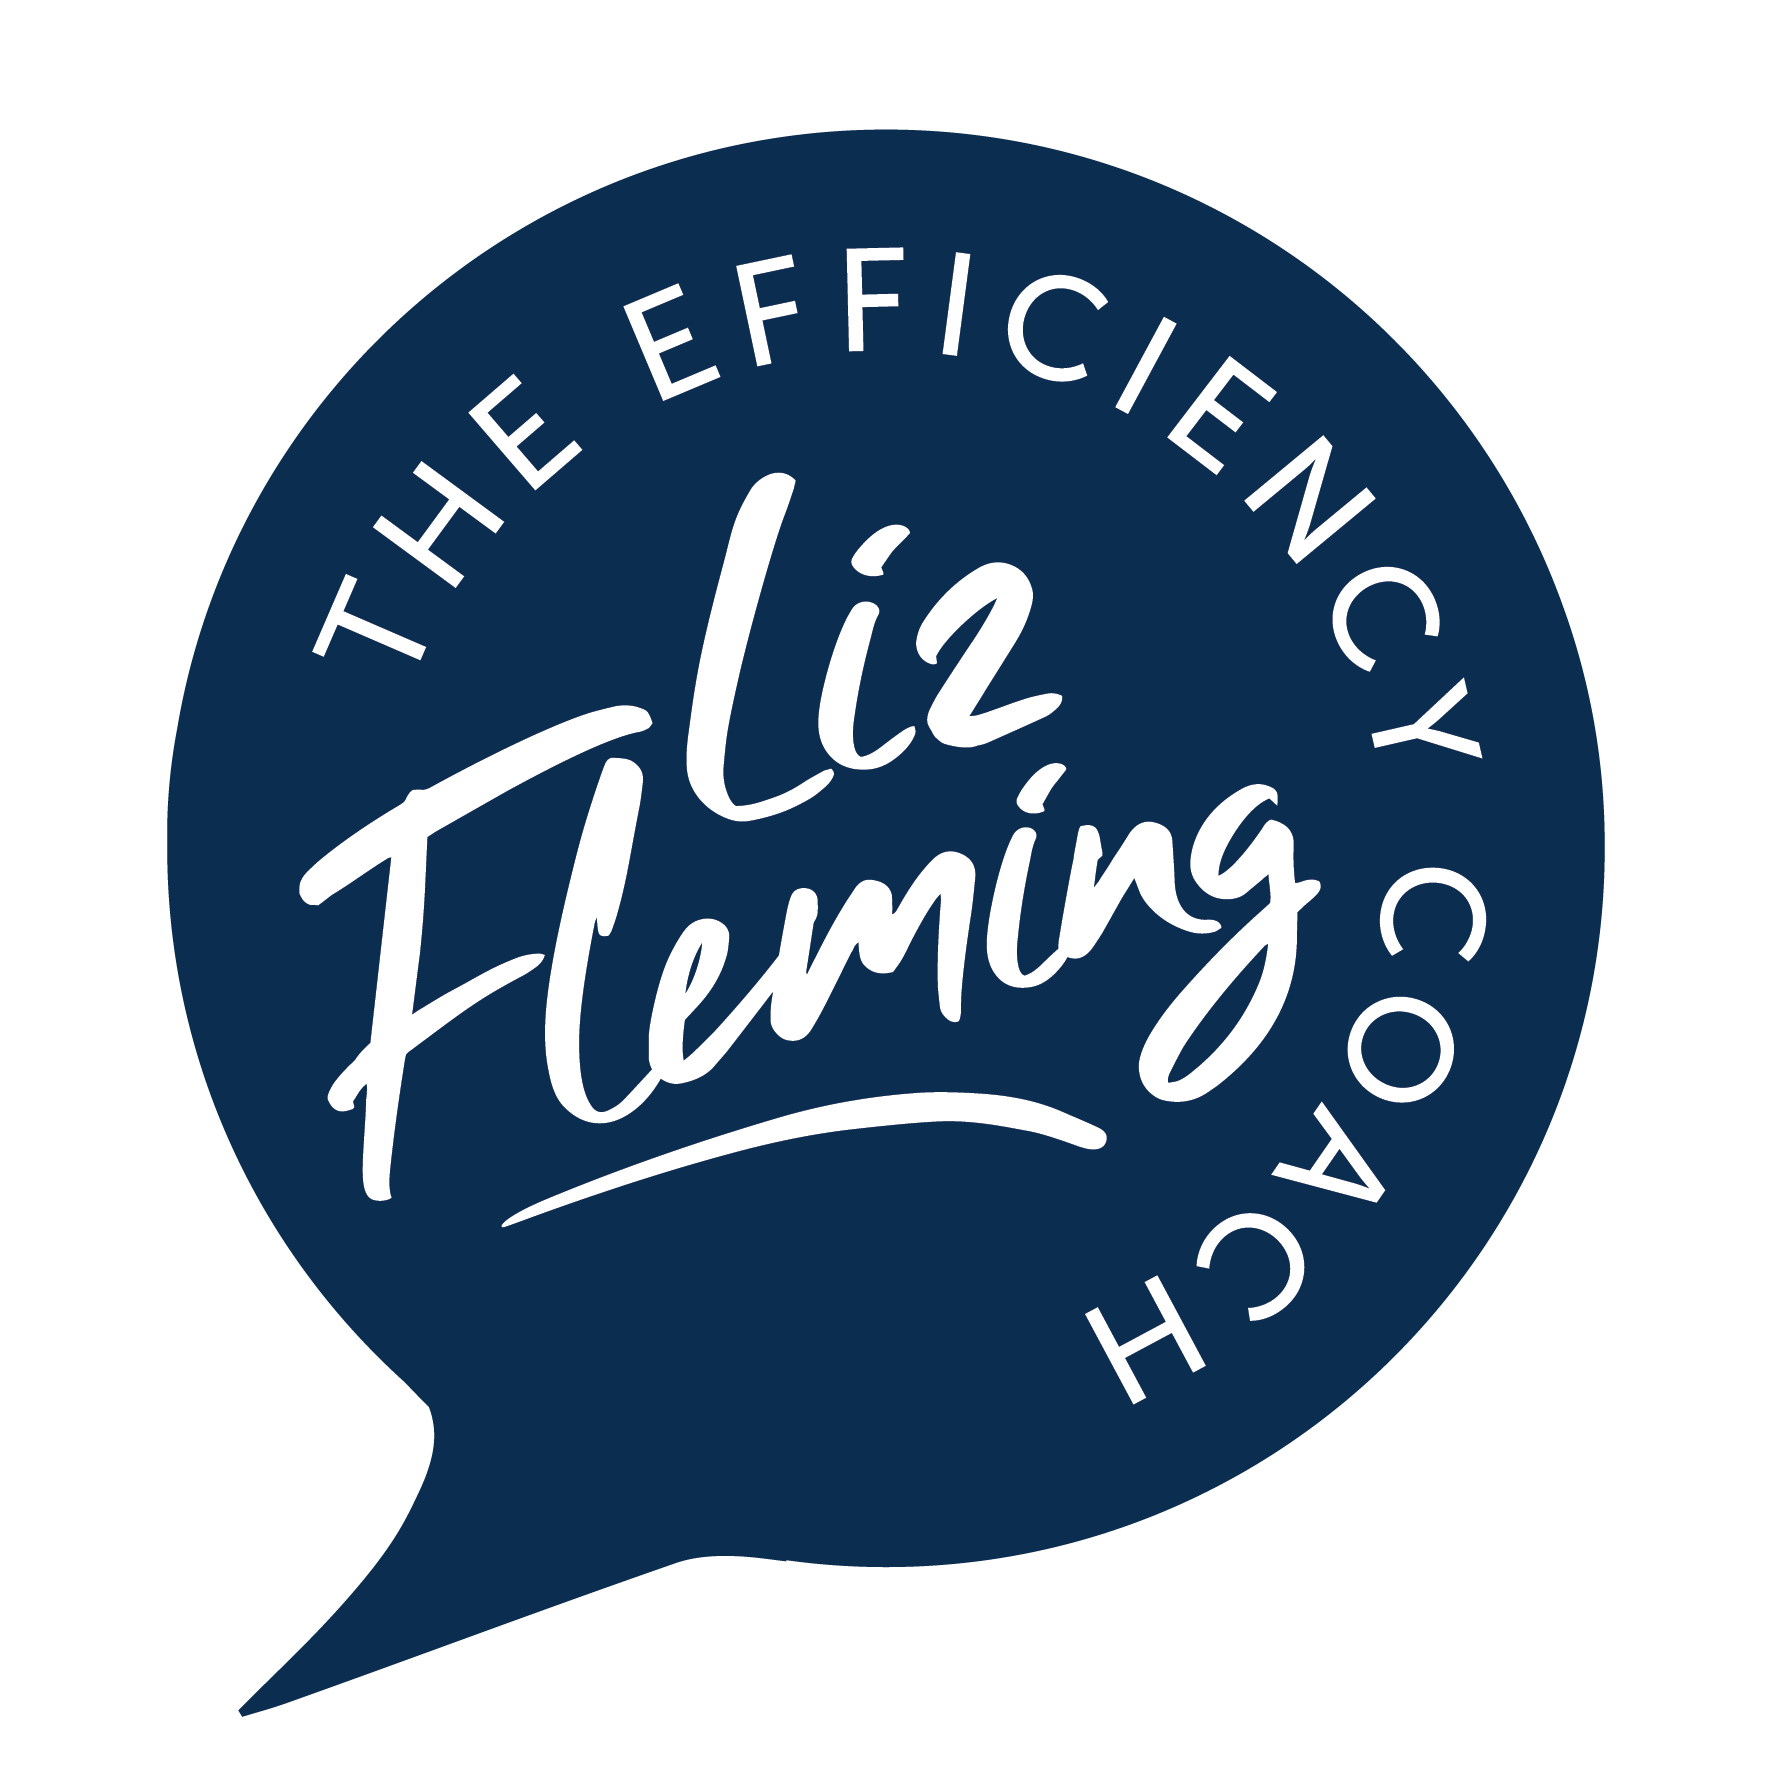 Liz Fleming - The Efficiency Coach